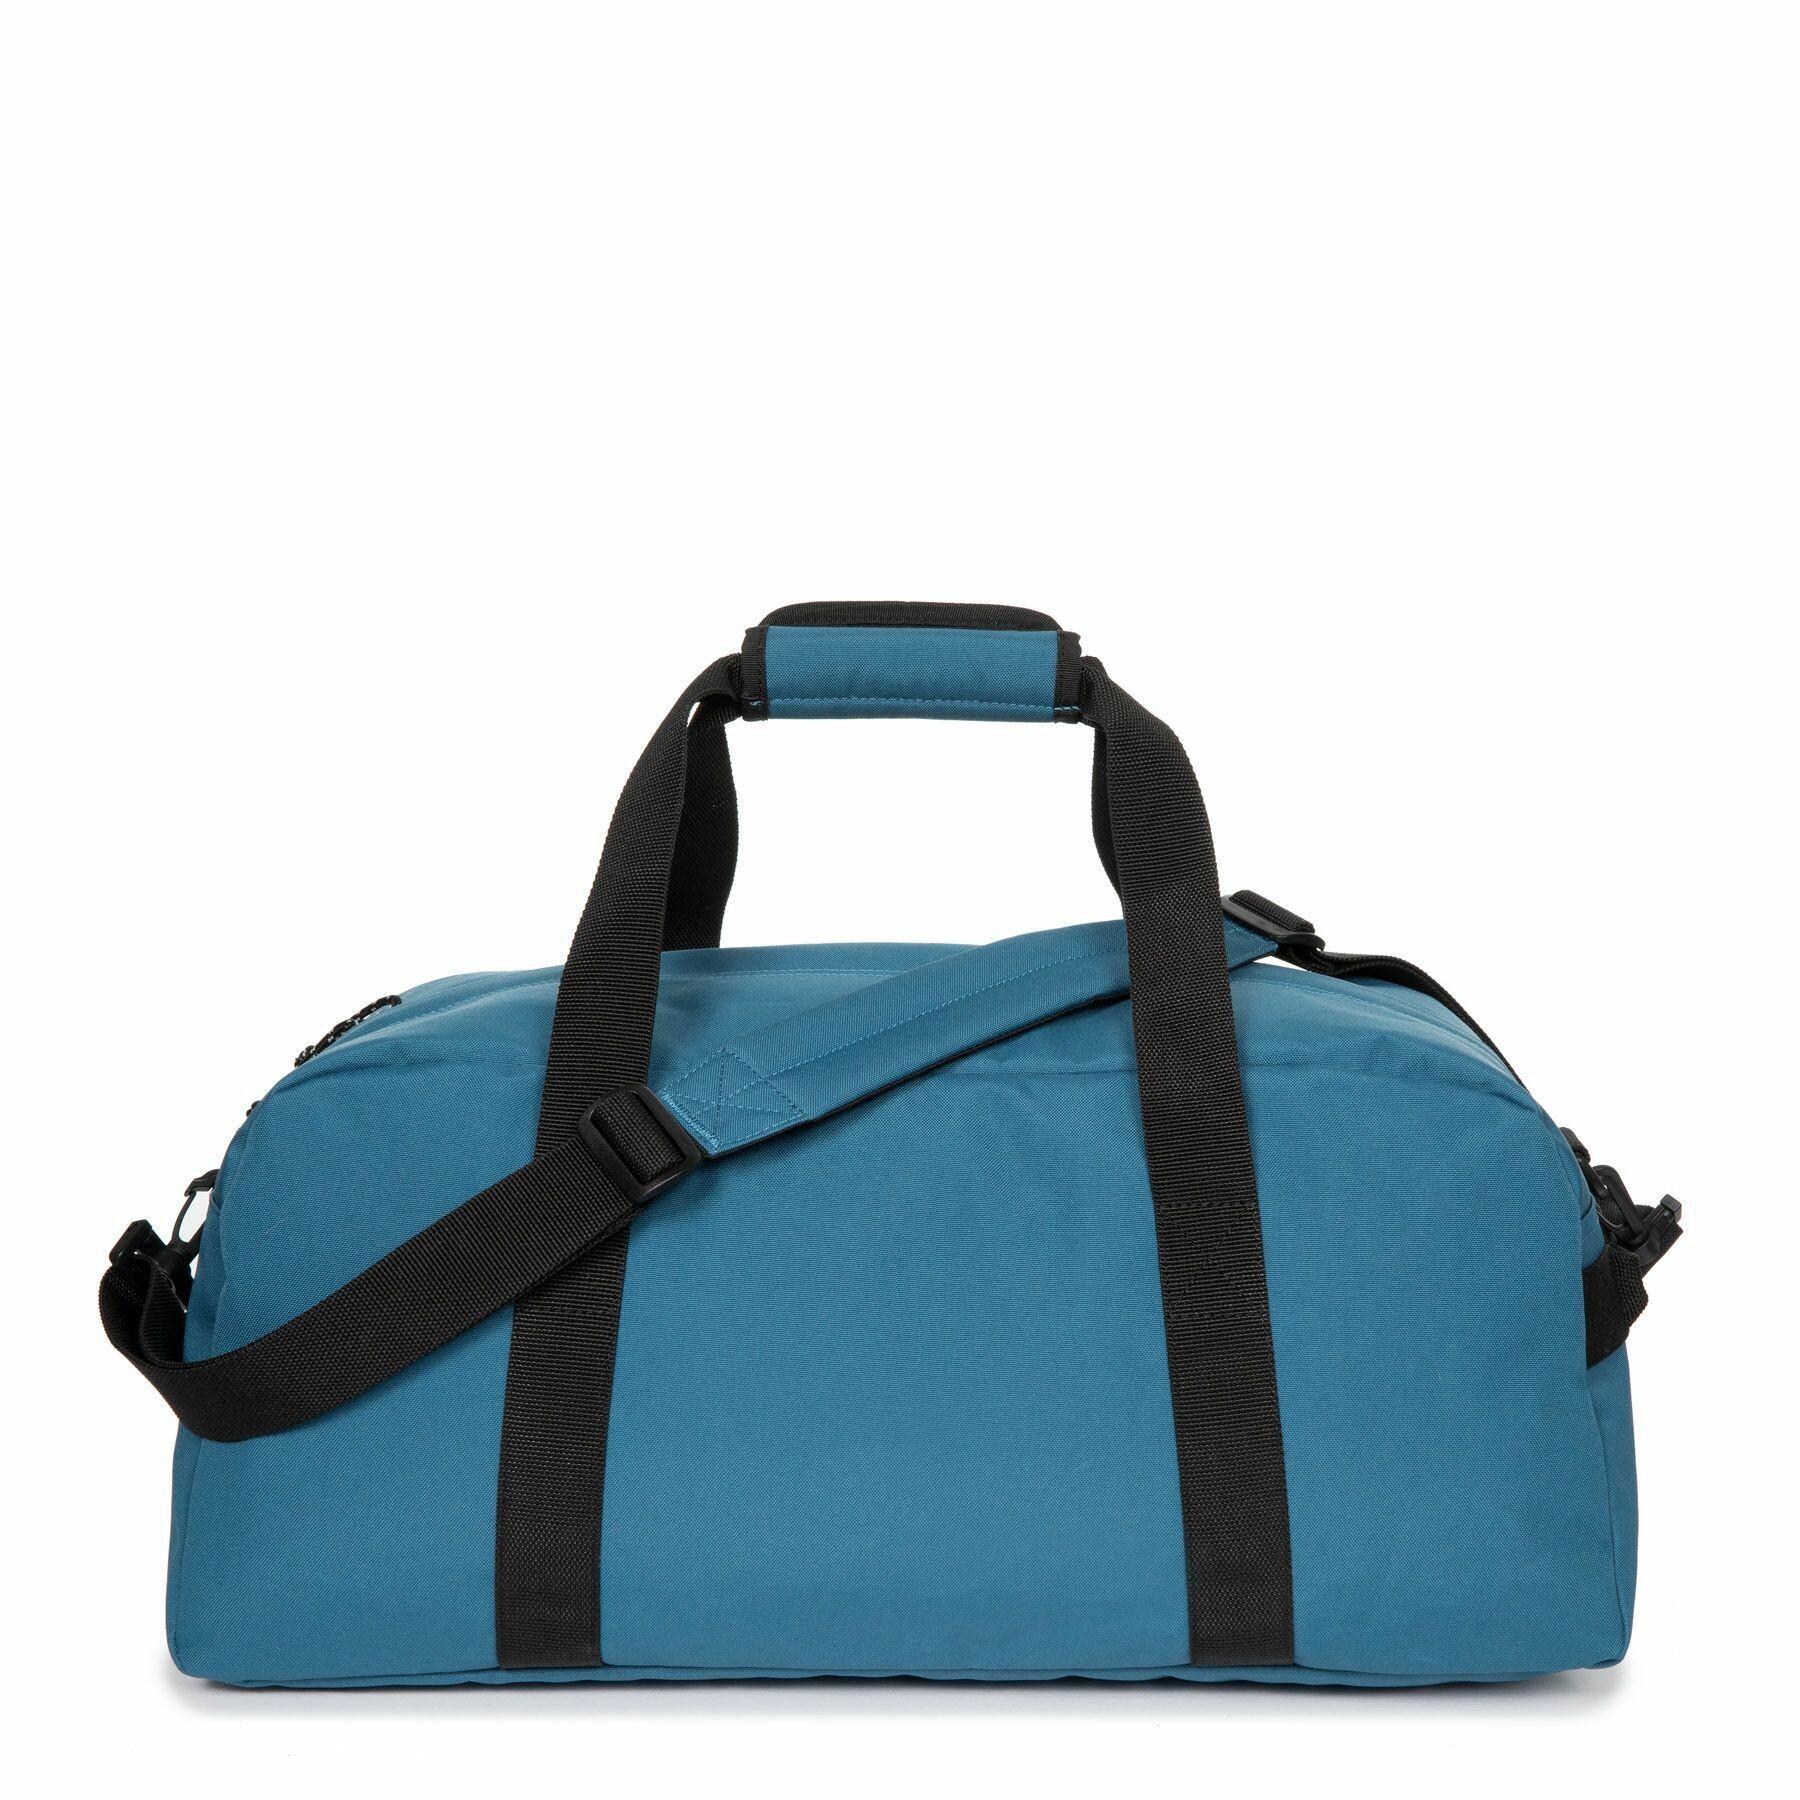 Travel bag Eastpak Stand Plus